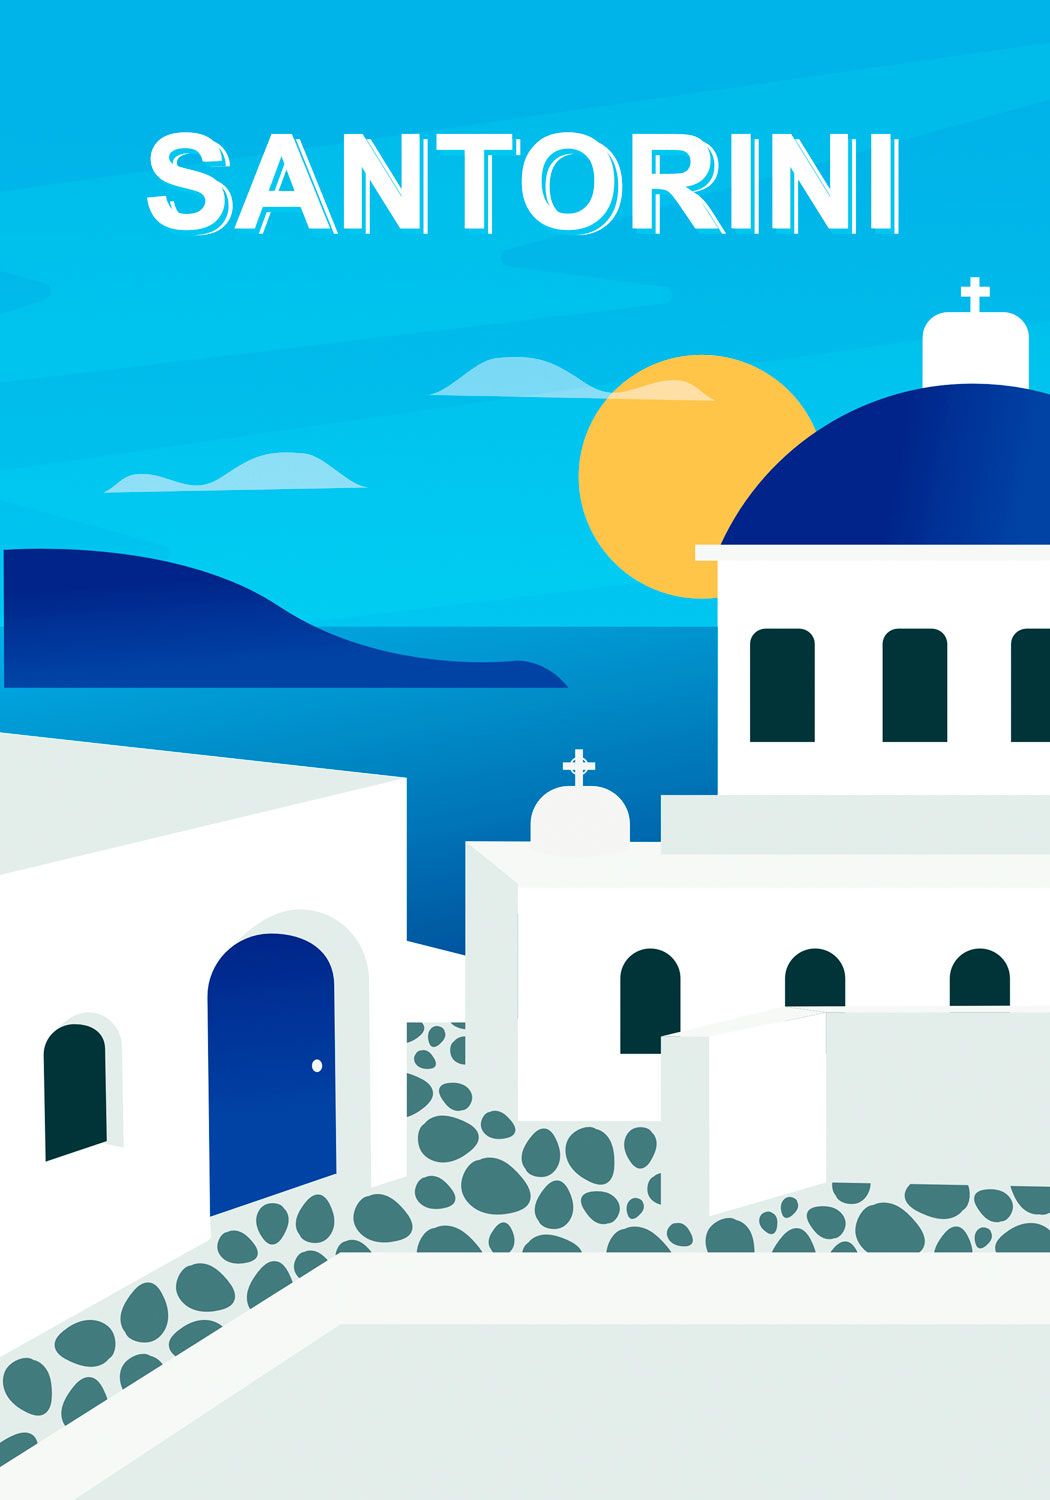 Santorini Travel Poster. Free UK Delivery